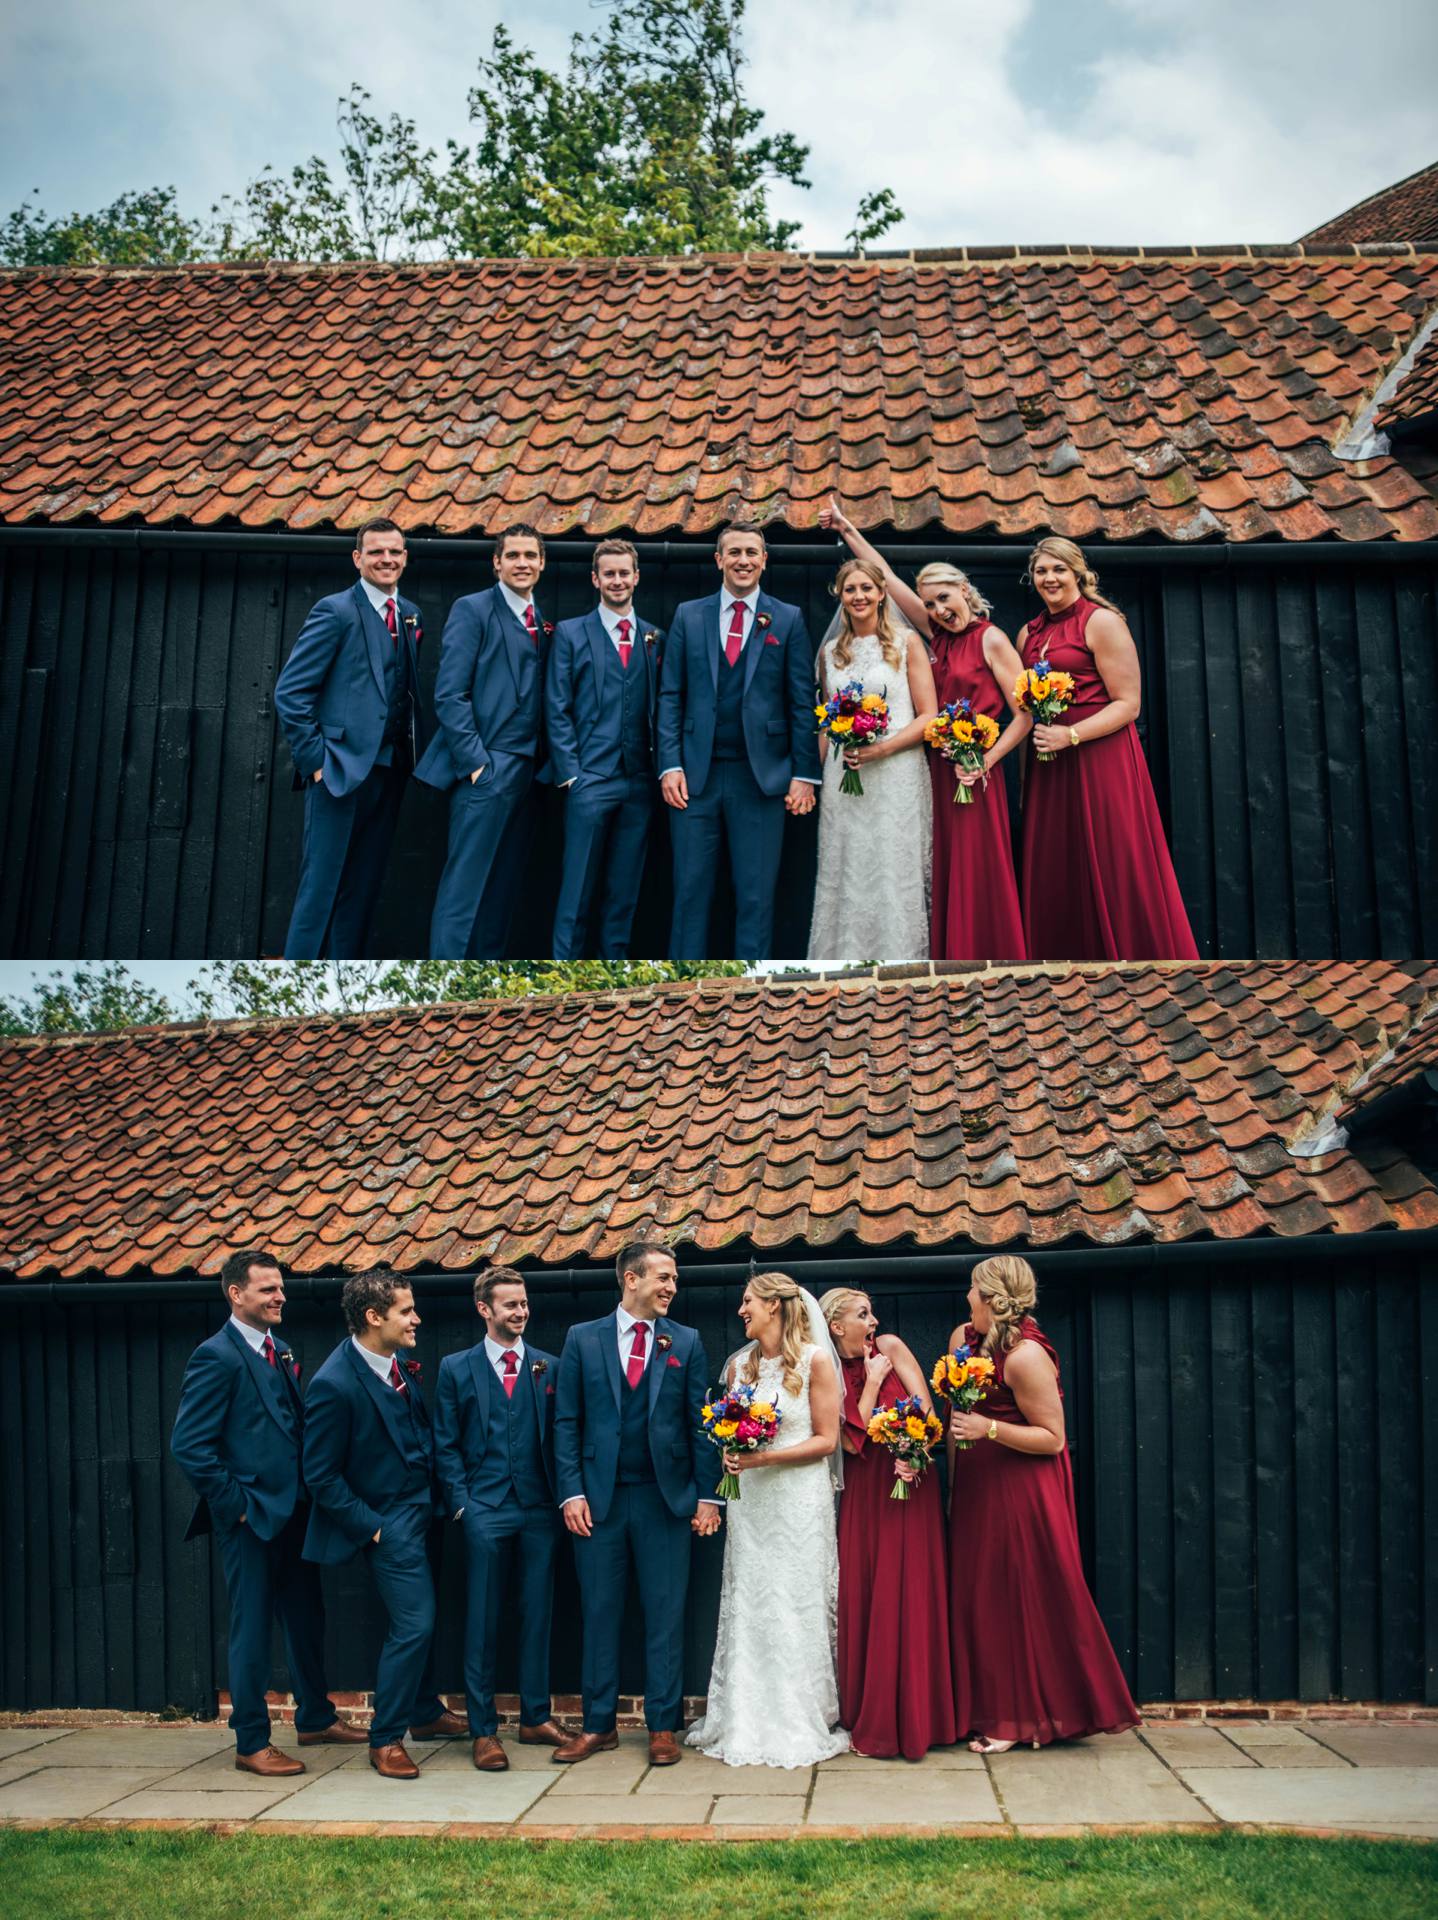 Colourful Rustic Spring Blake Hall Ongar Barn Wedding Essex UK Documentary Wedding Photographer 